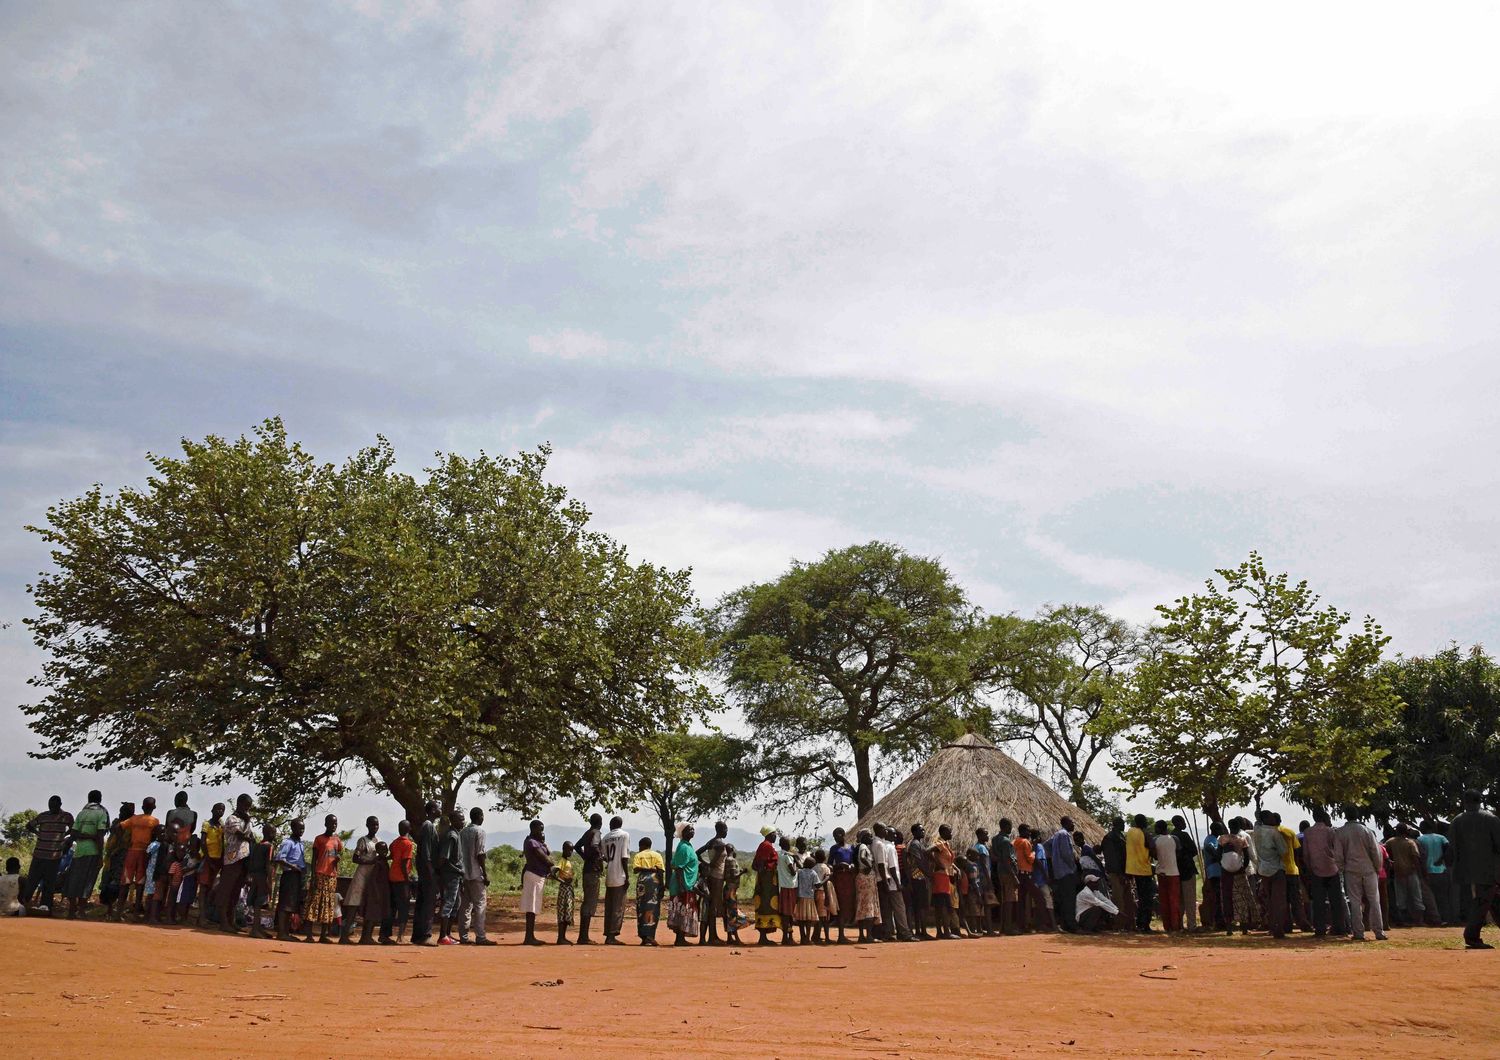 Sud Sudan, ecoprofughi, rifugiati ambientali, siccit&agrave;, carestia (afp)